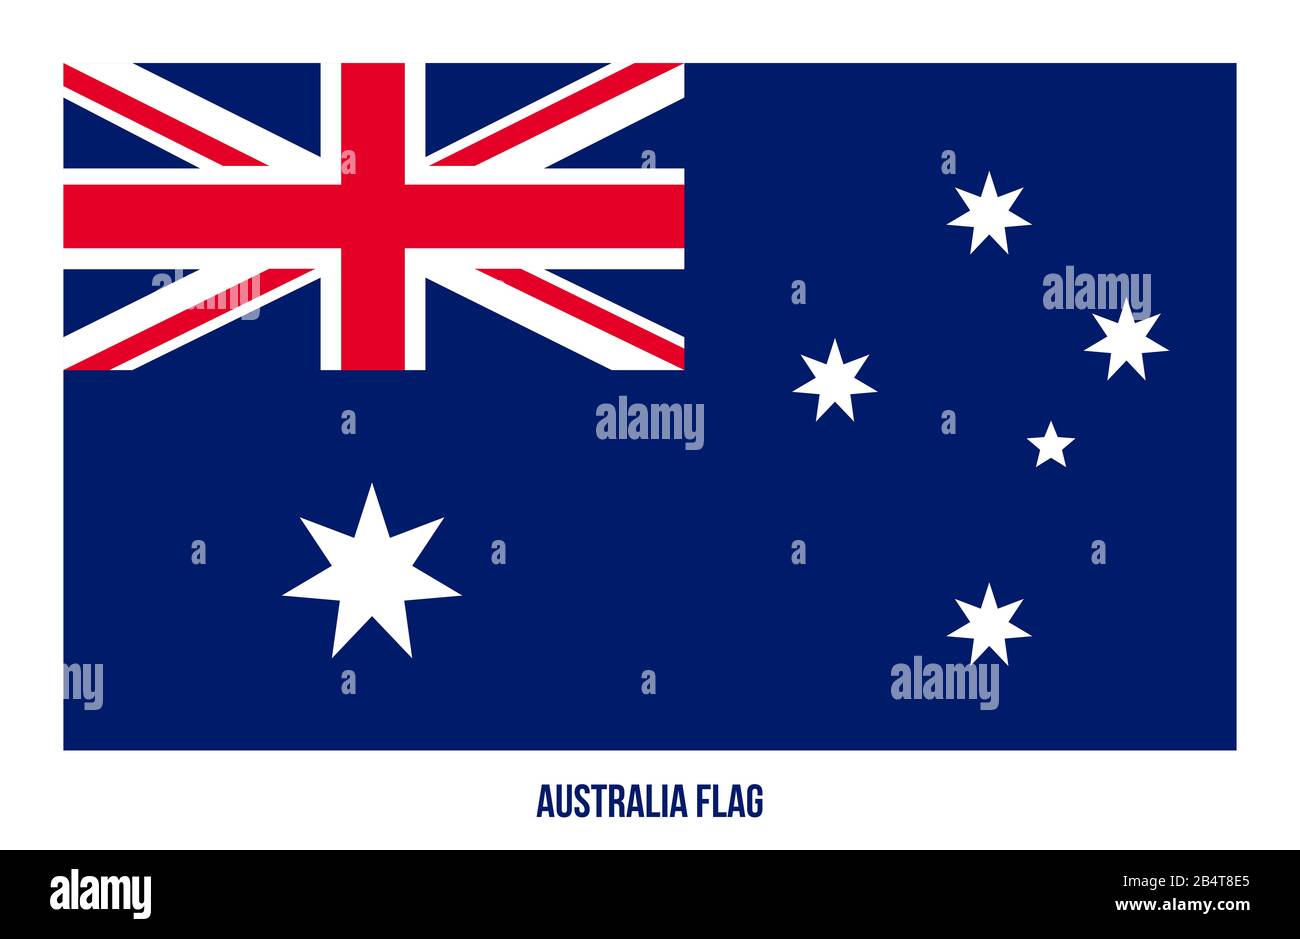 Flag Vector Illustration on White Background. Australia National Flag Stock Photo - Alamy